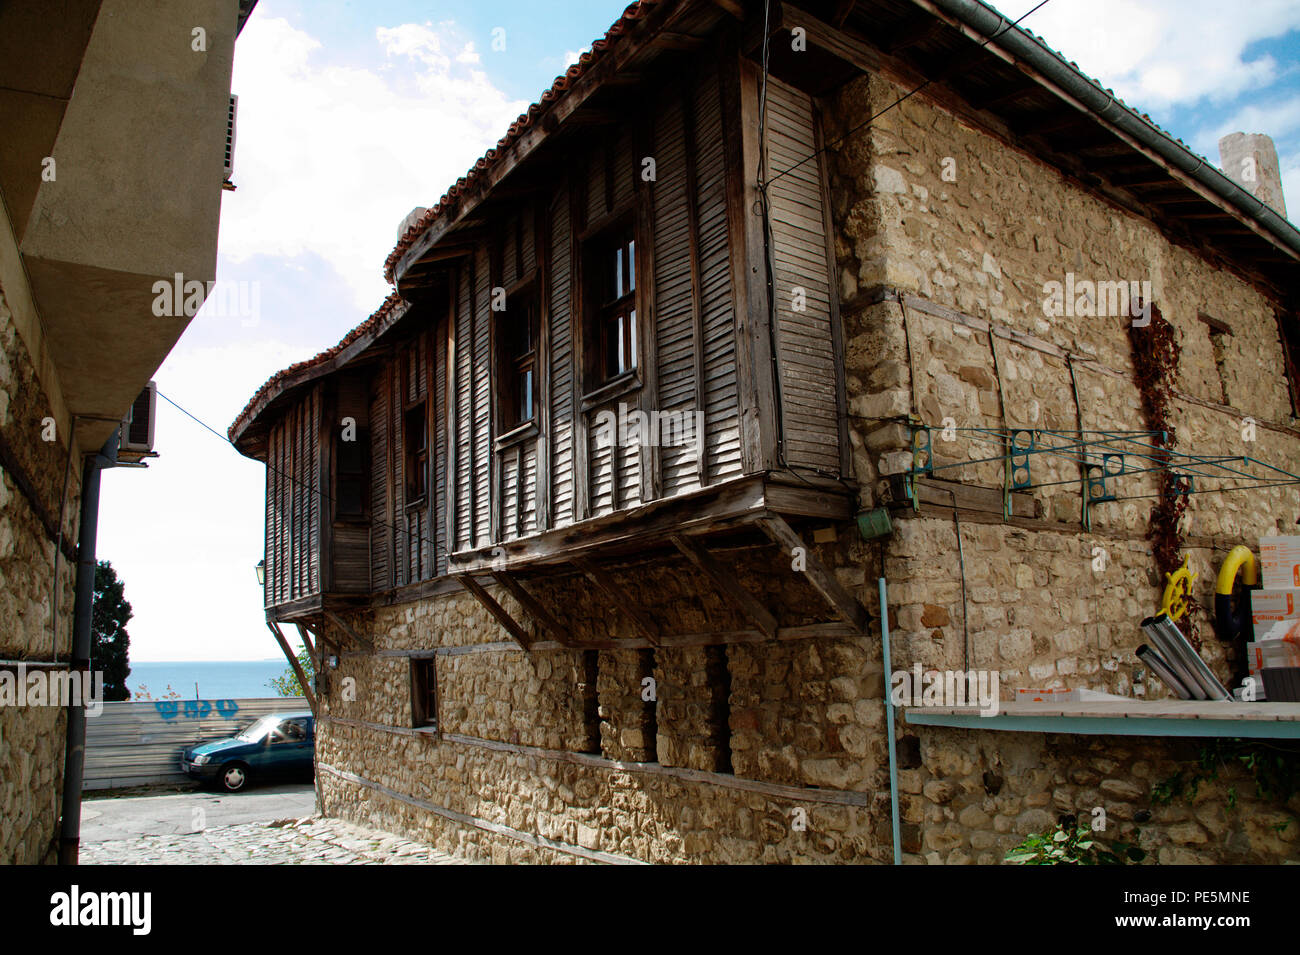 Ancient Nesebar, Bulgaria - UNESCO World Heritage Sites Stock Photo